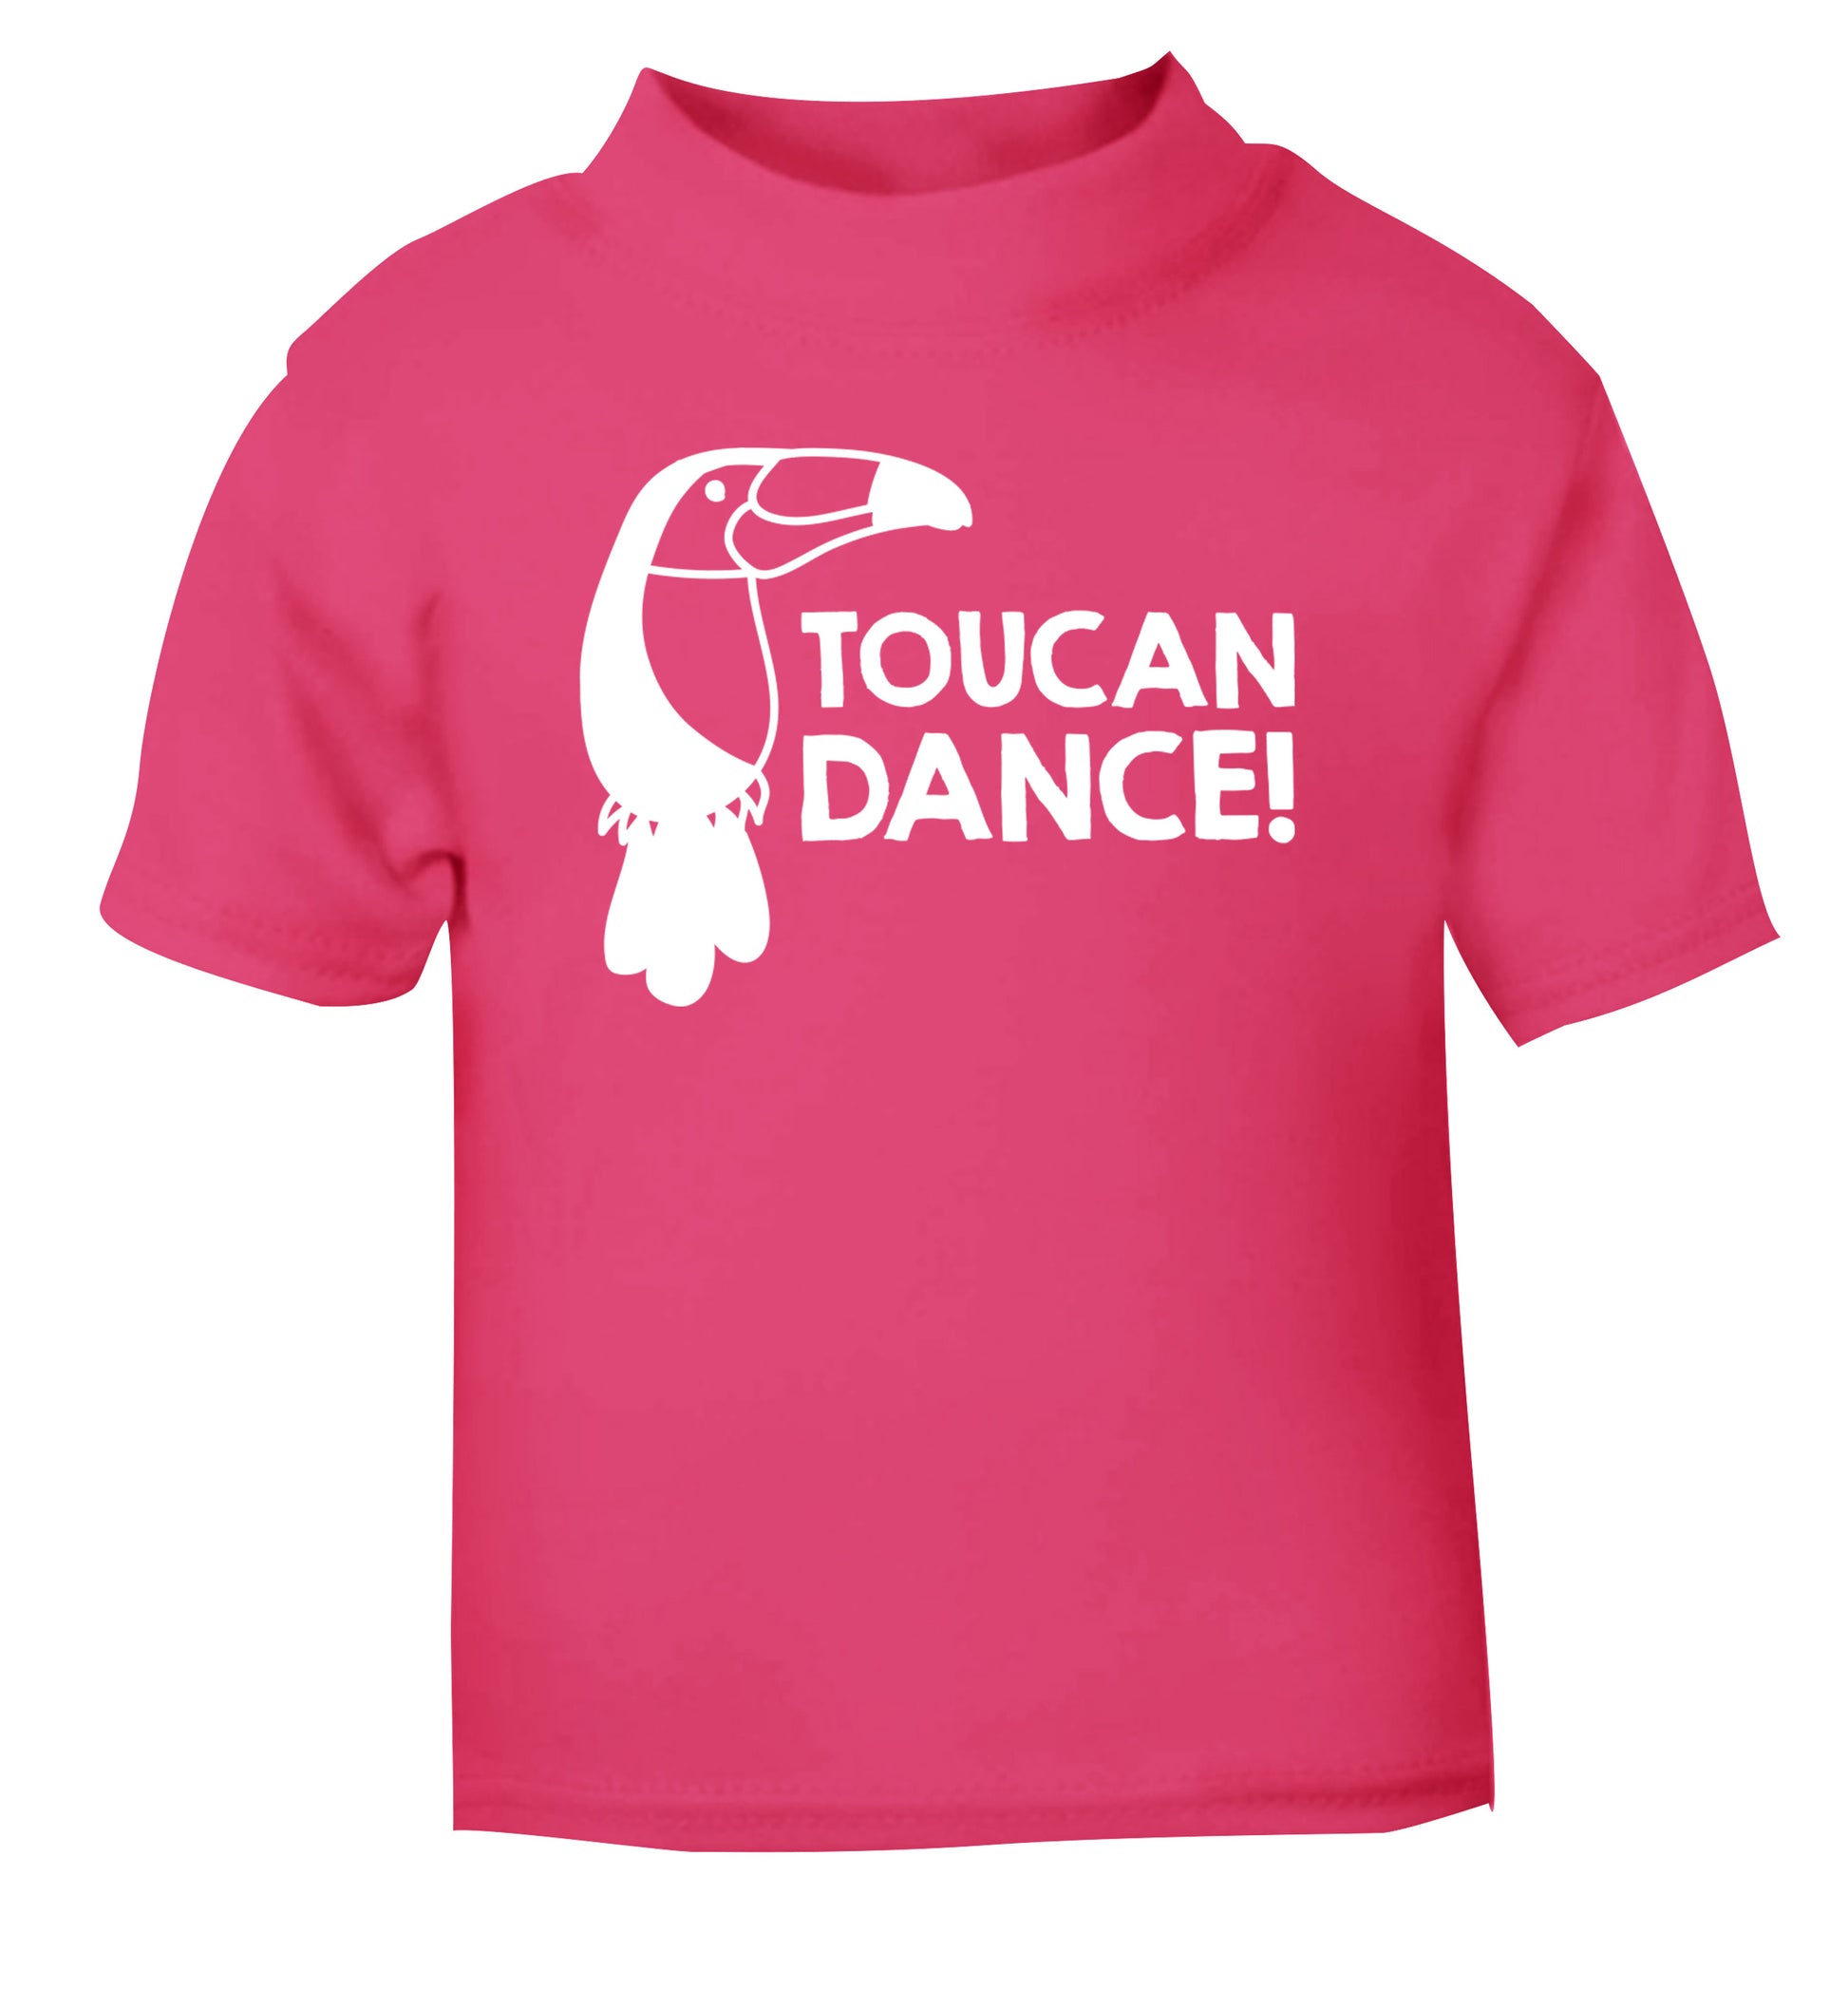 Toucan dance pink Baby Toddler Tshirt 2 Years